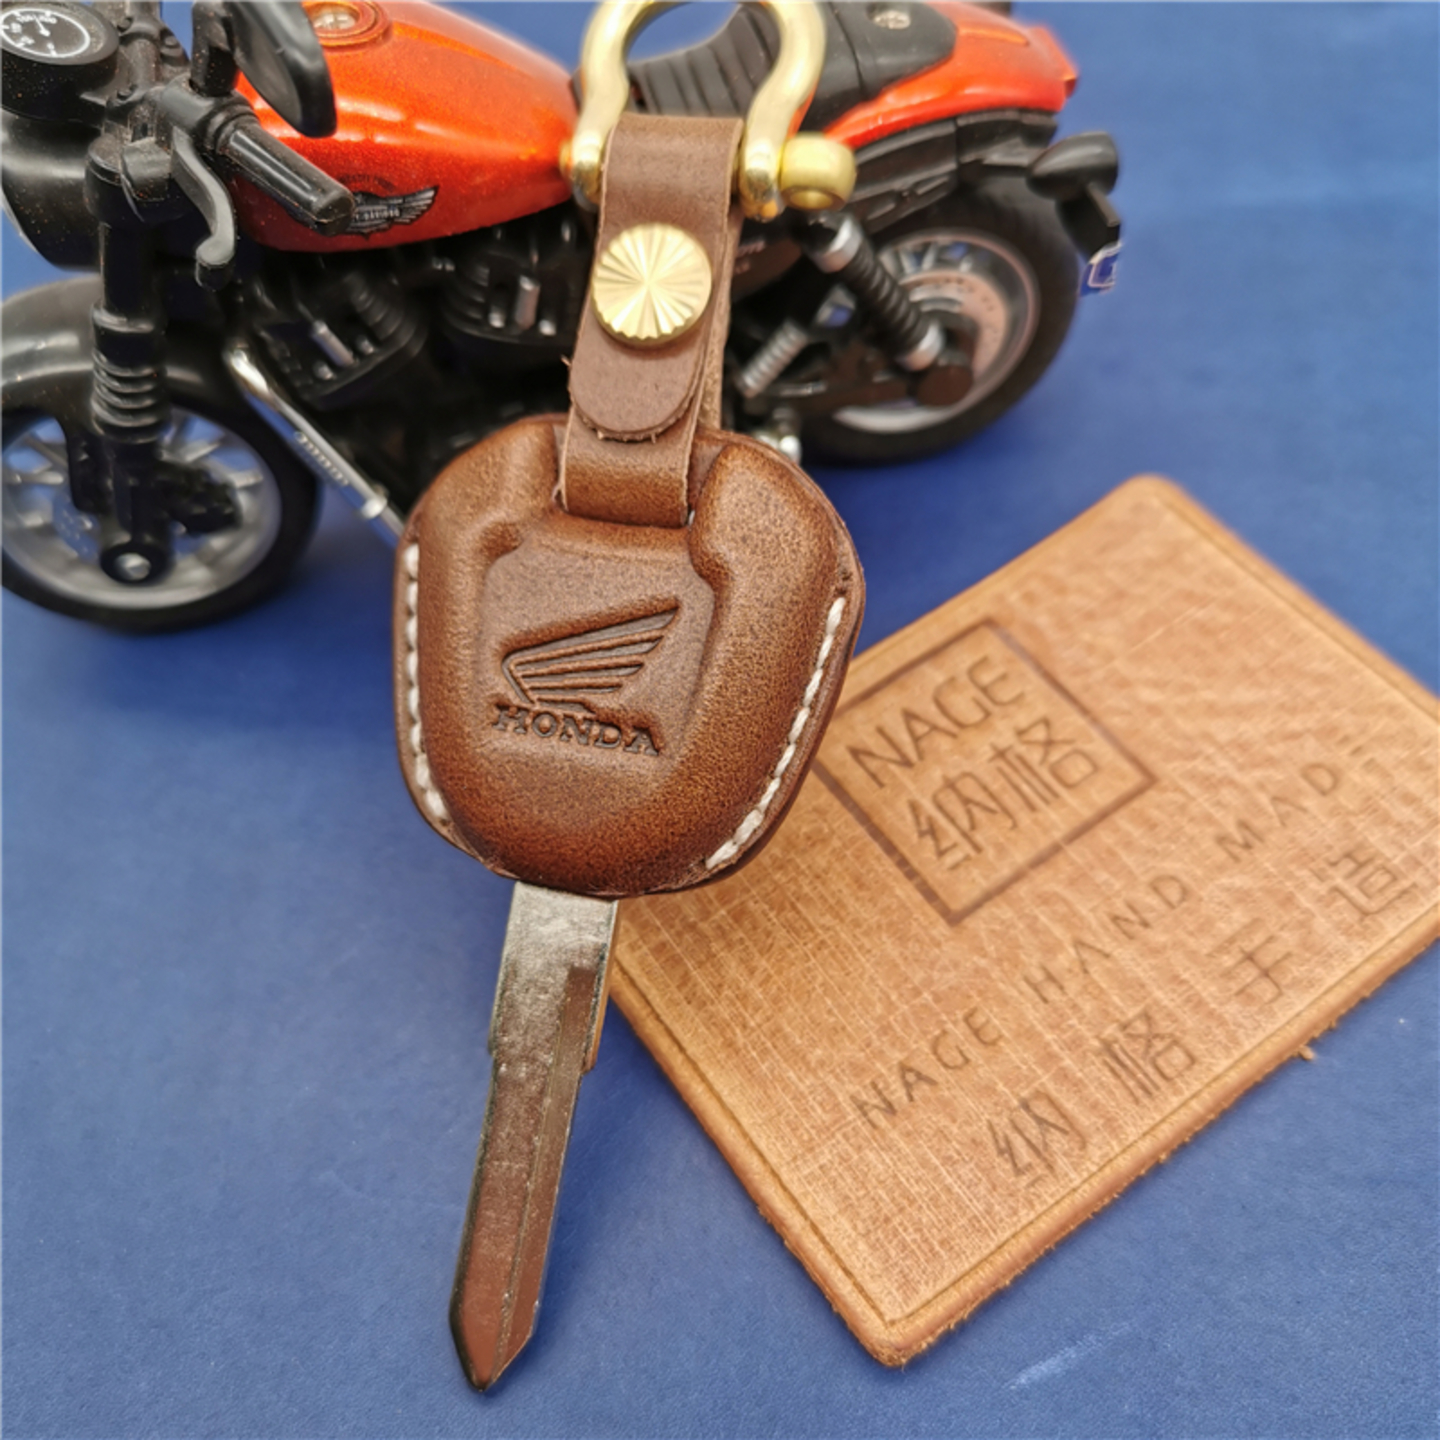 Honda handmade leather key chain tag 